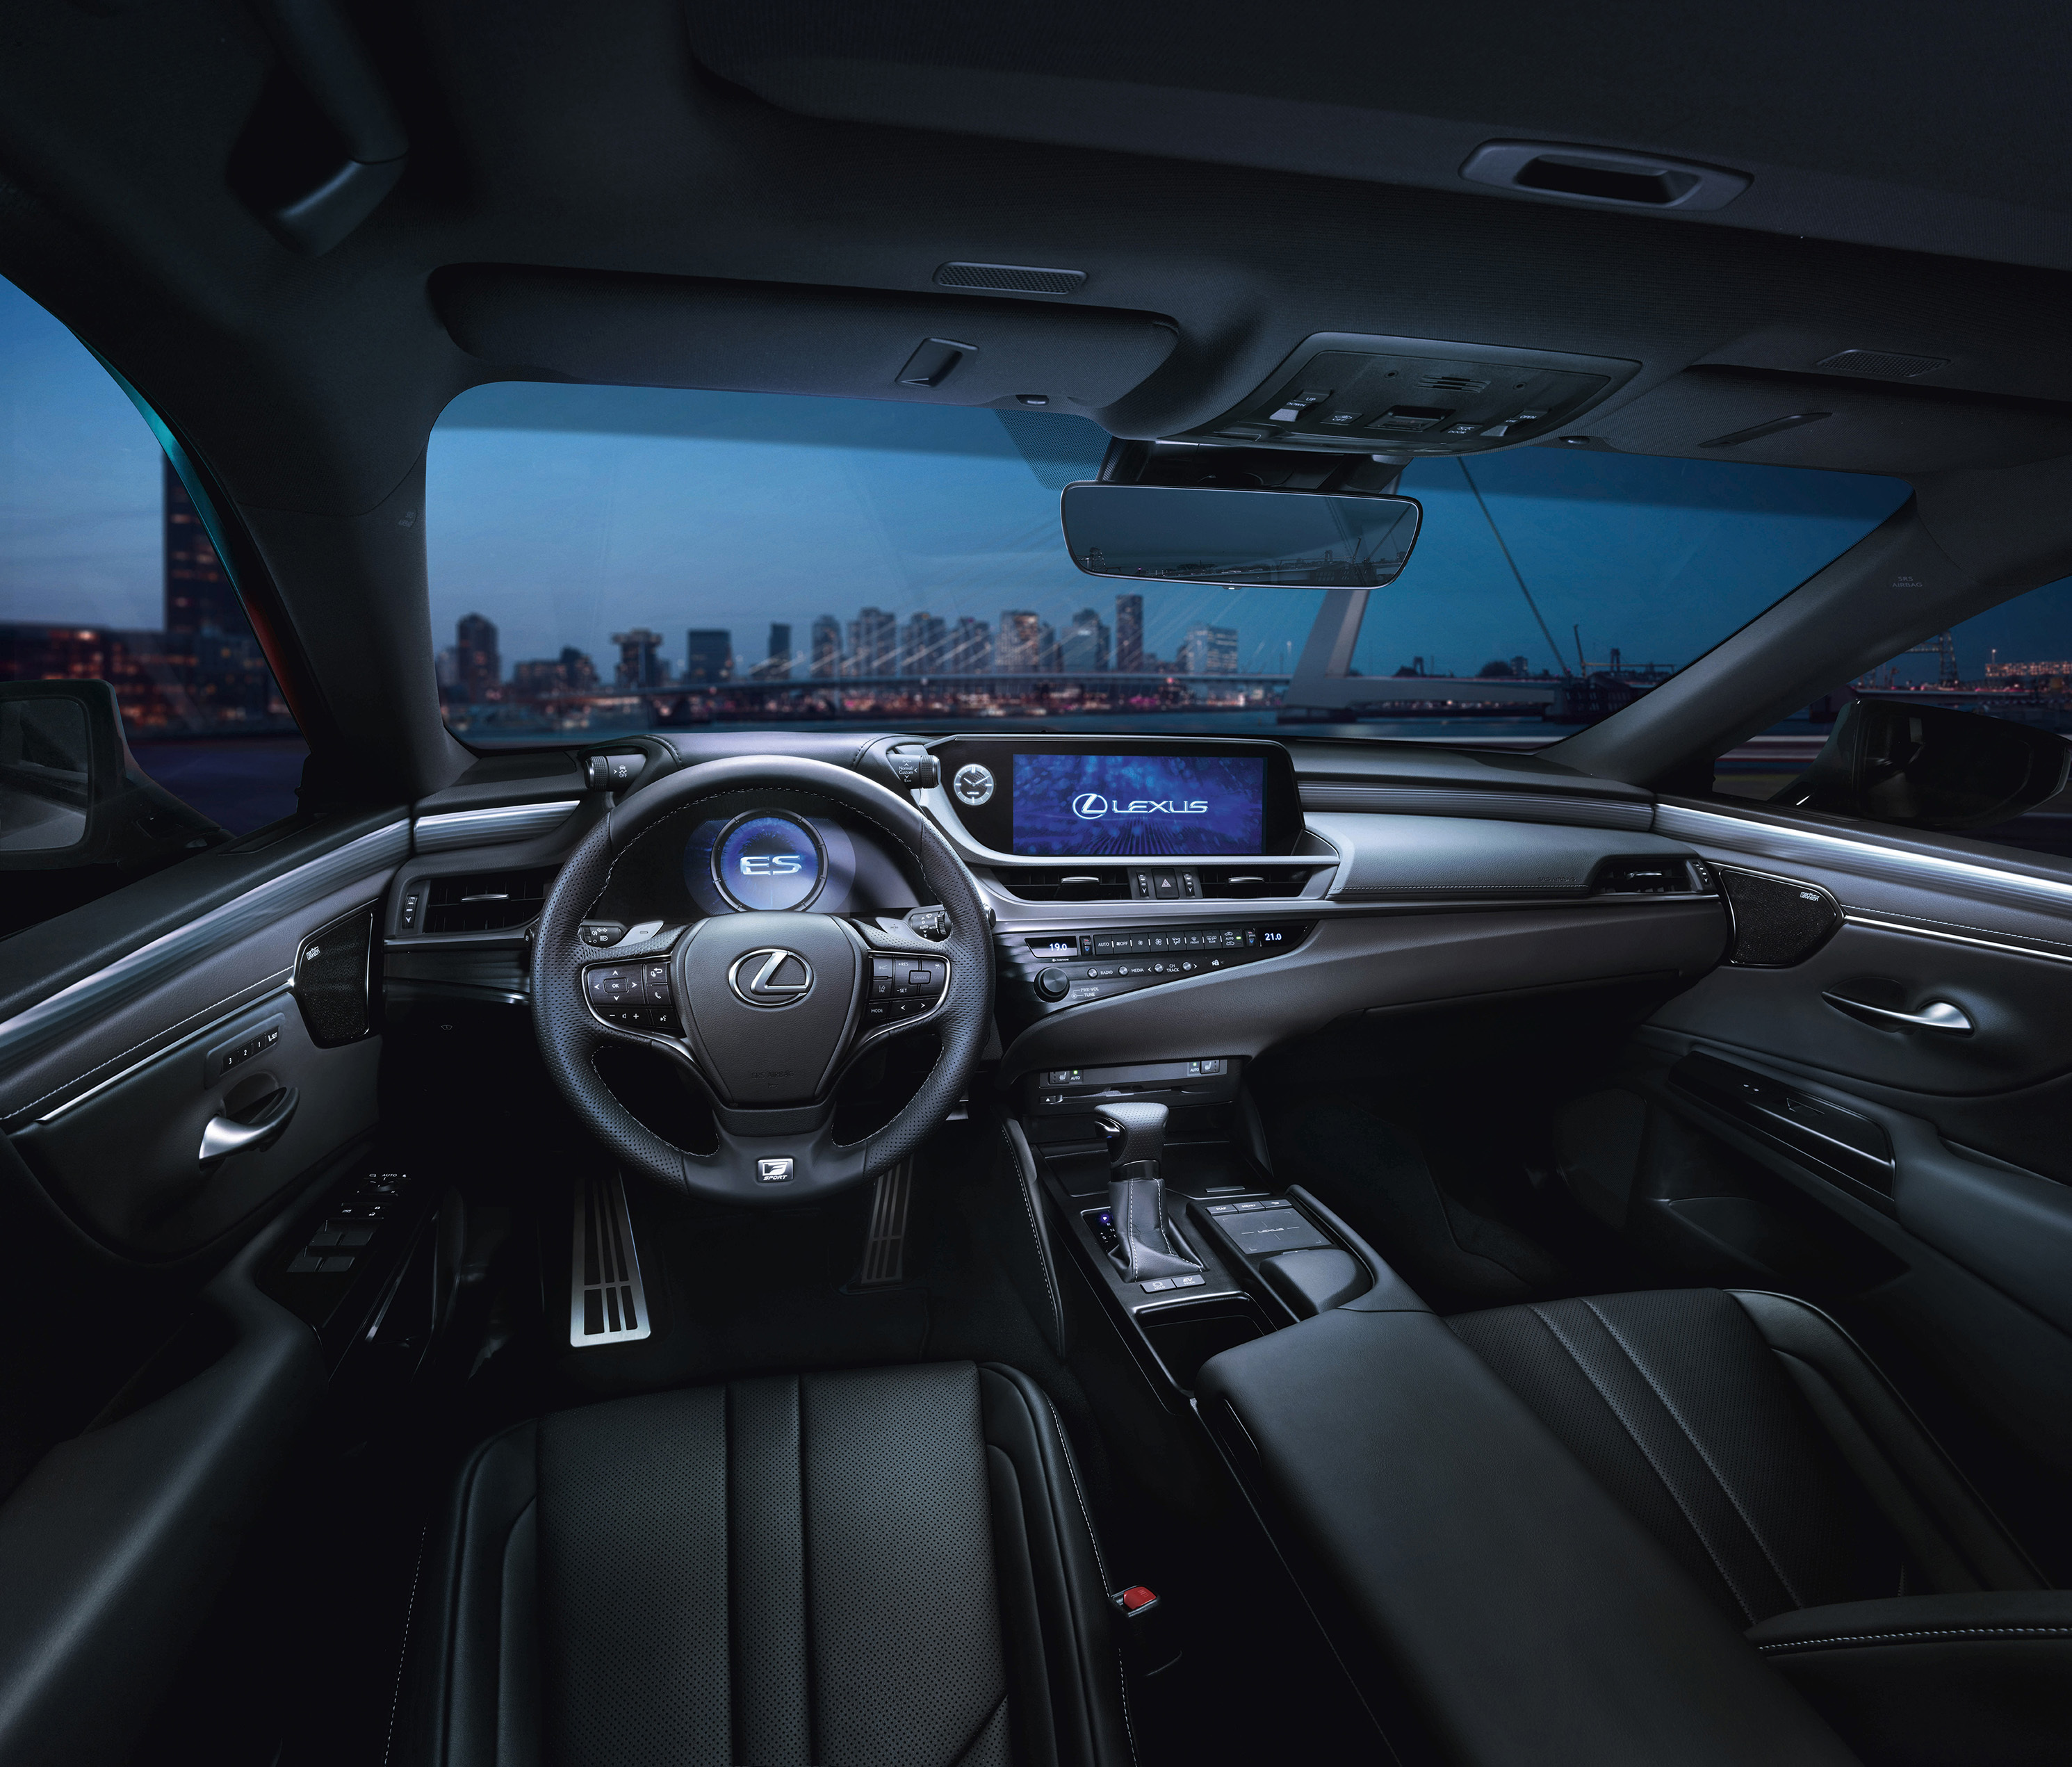 Lexus ES 300h sedan specifications